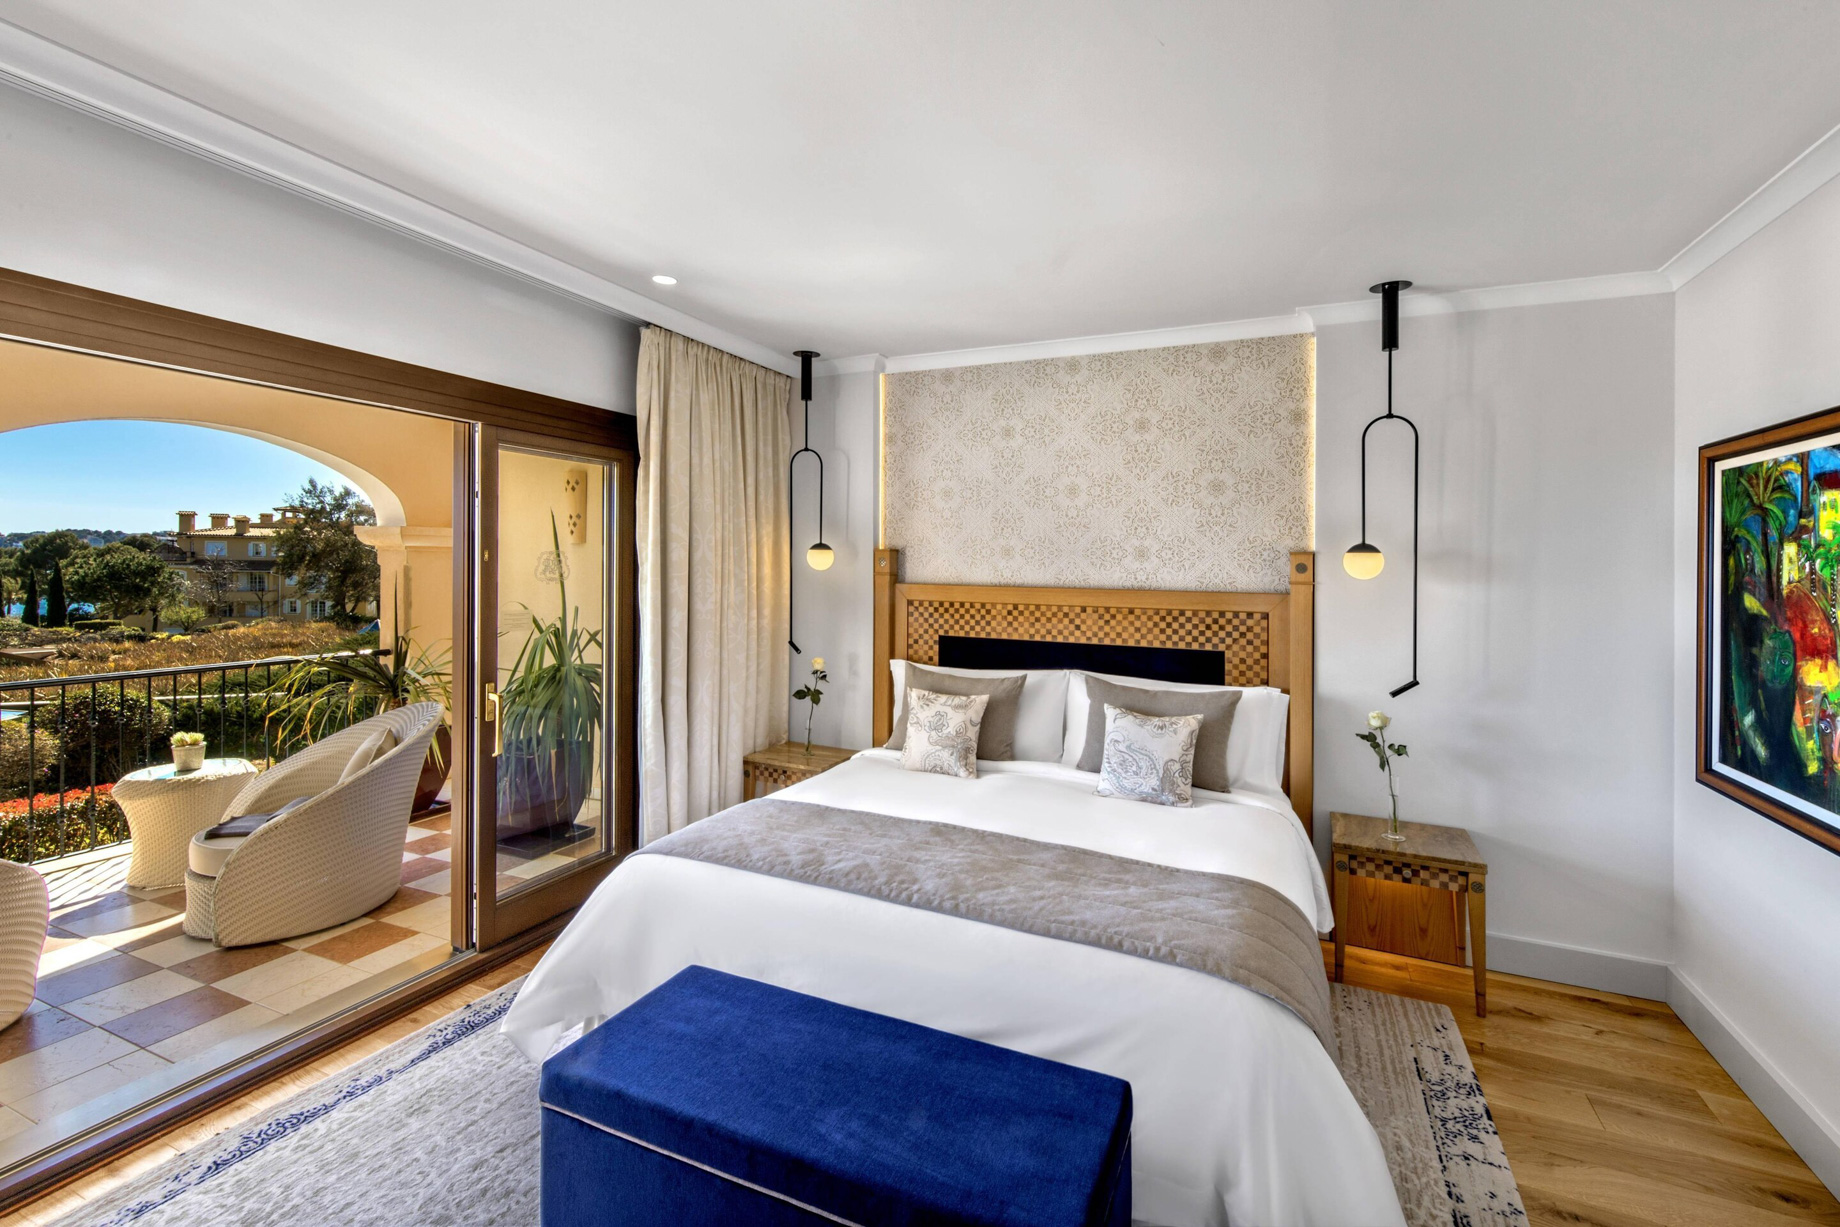 The St. Regis Mardavall Mallorca Resort – Palma de Mallorca, Spain – Ocean Two Suite Bedroom Decor